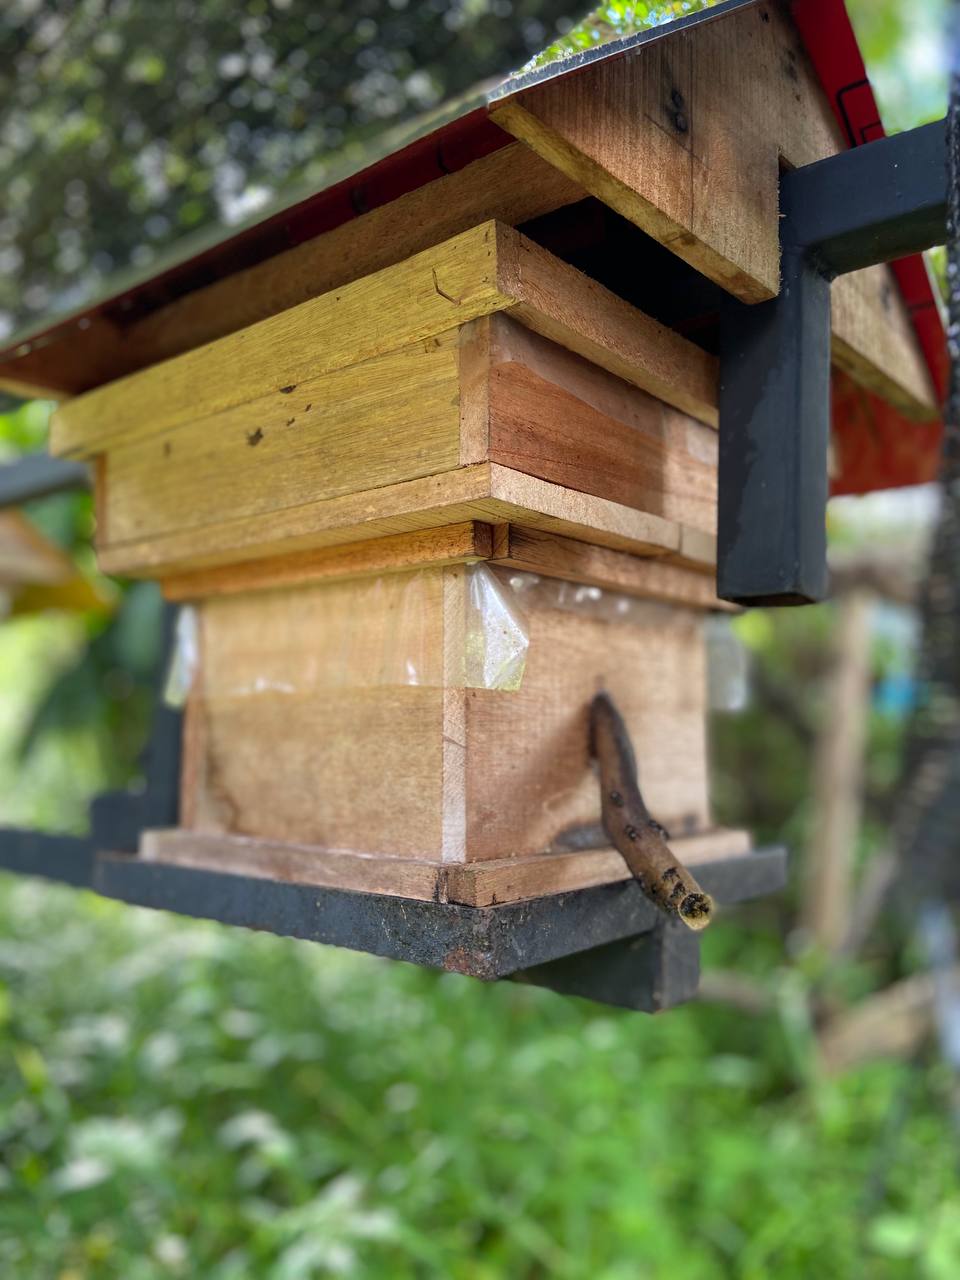 Bayu Kelulut Stingless Bee Honey 700g